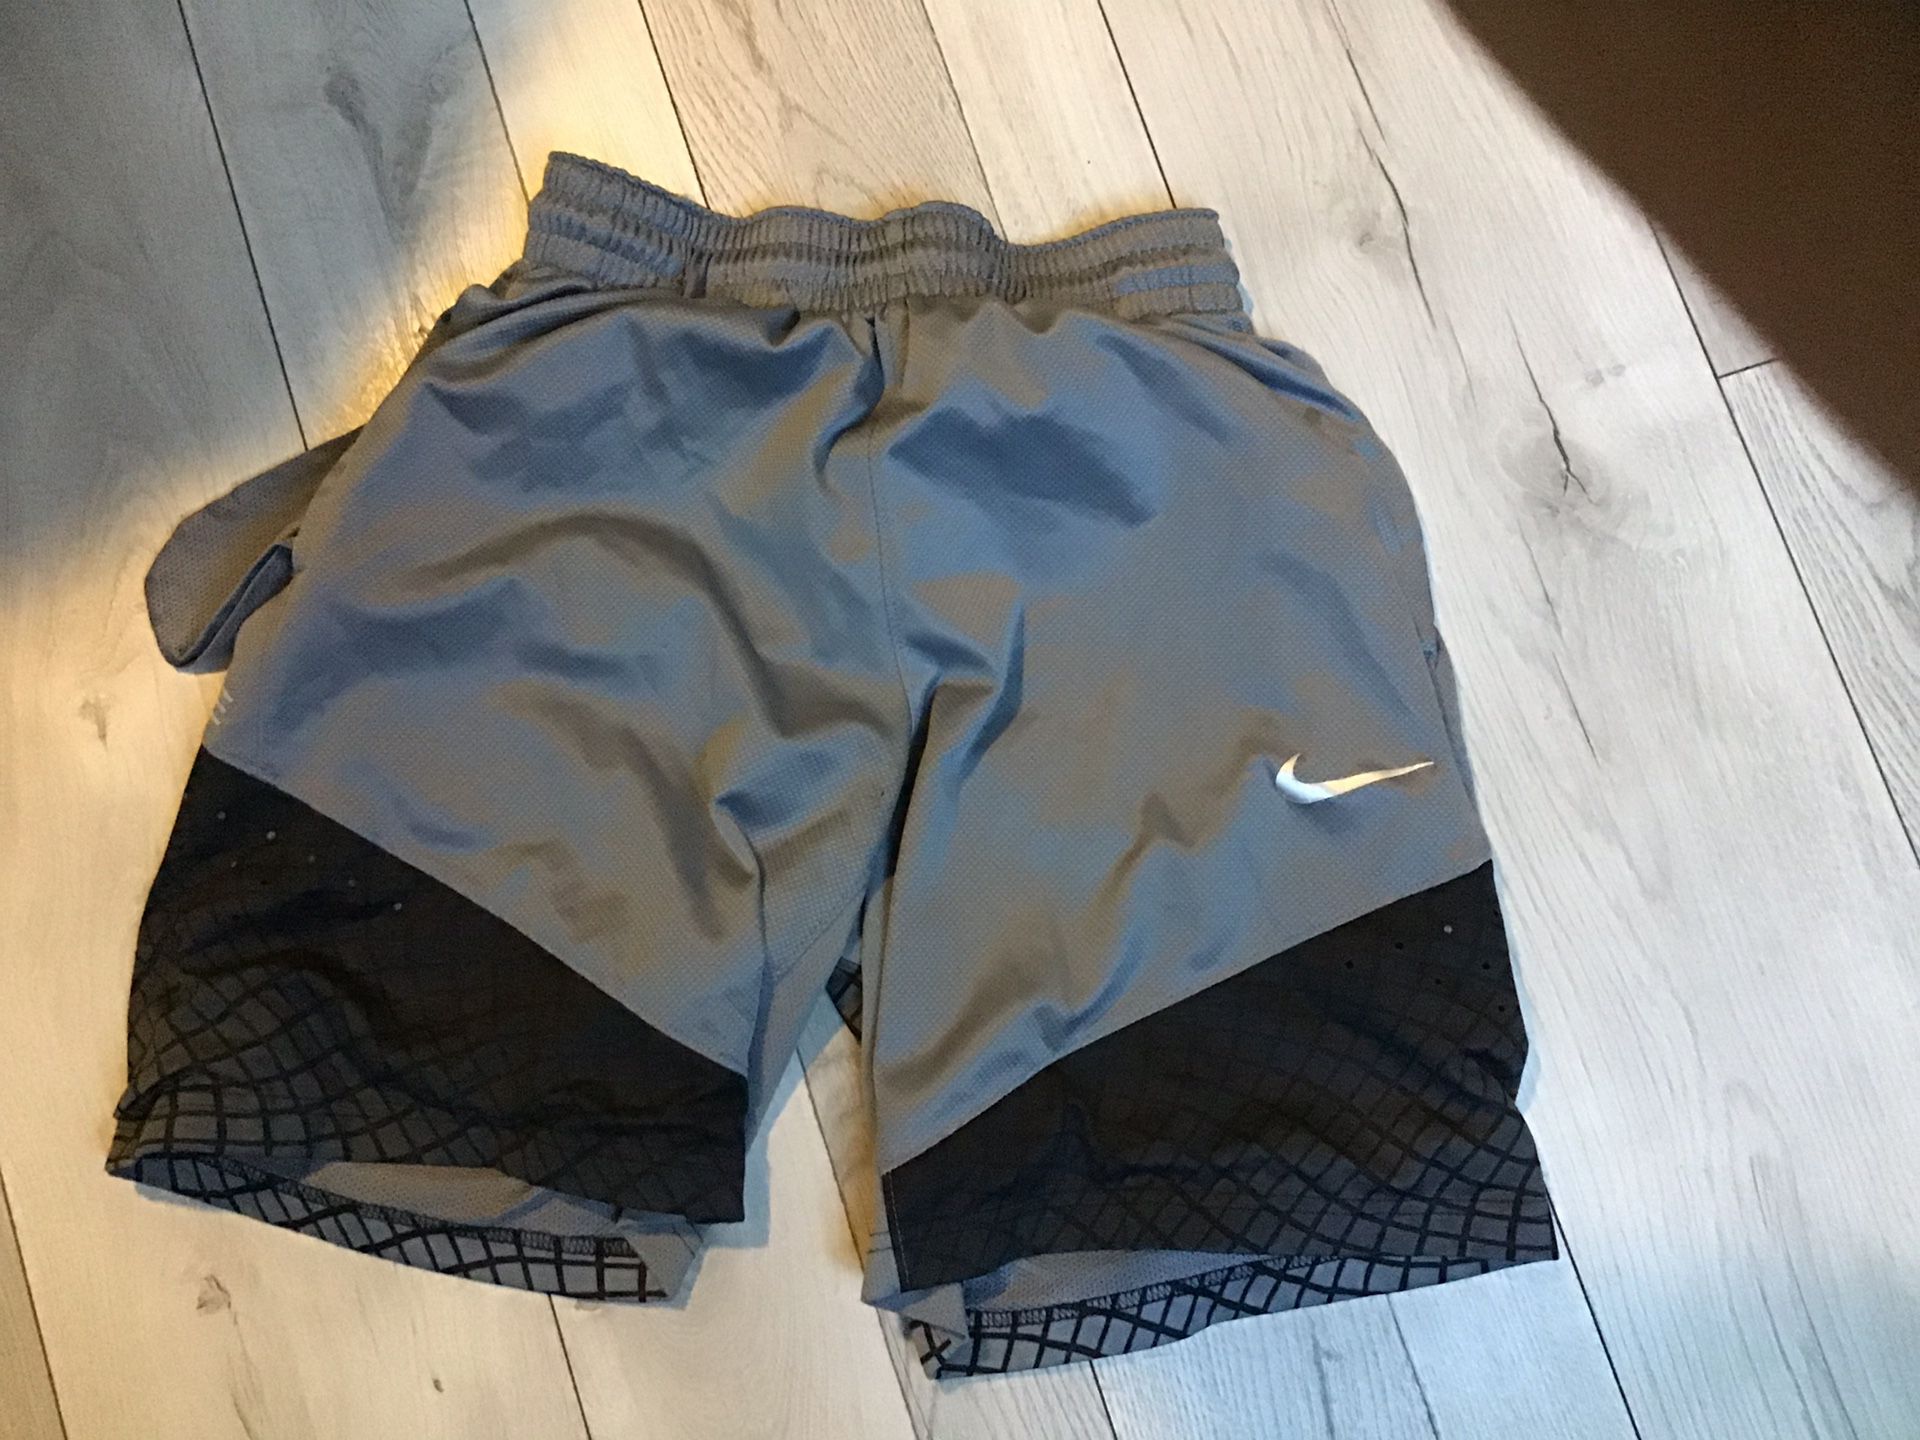 Nike gym shorts